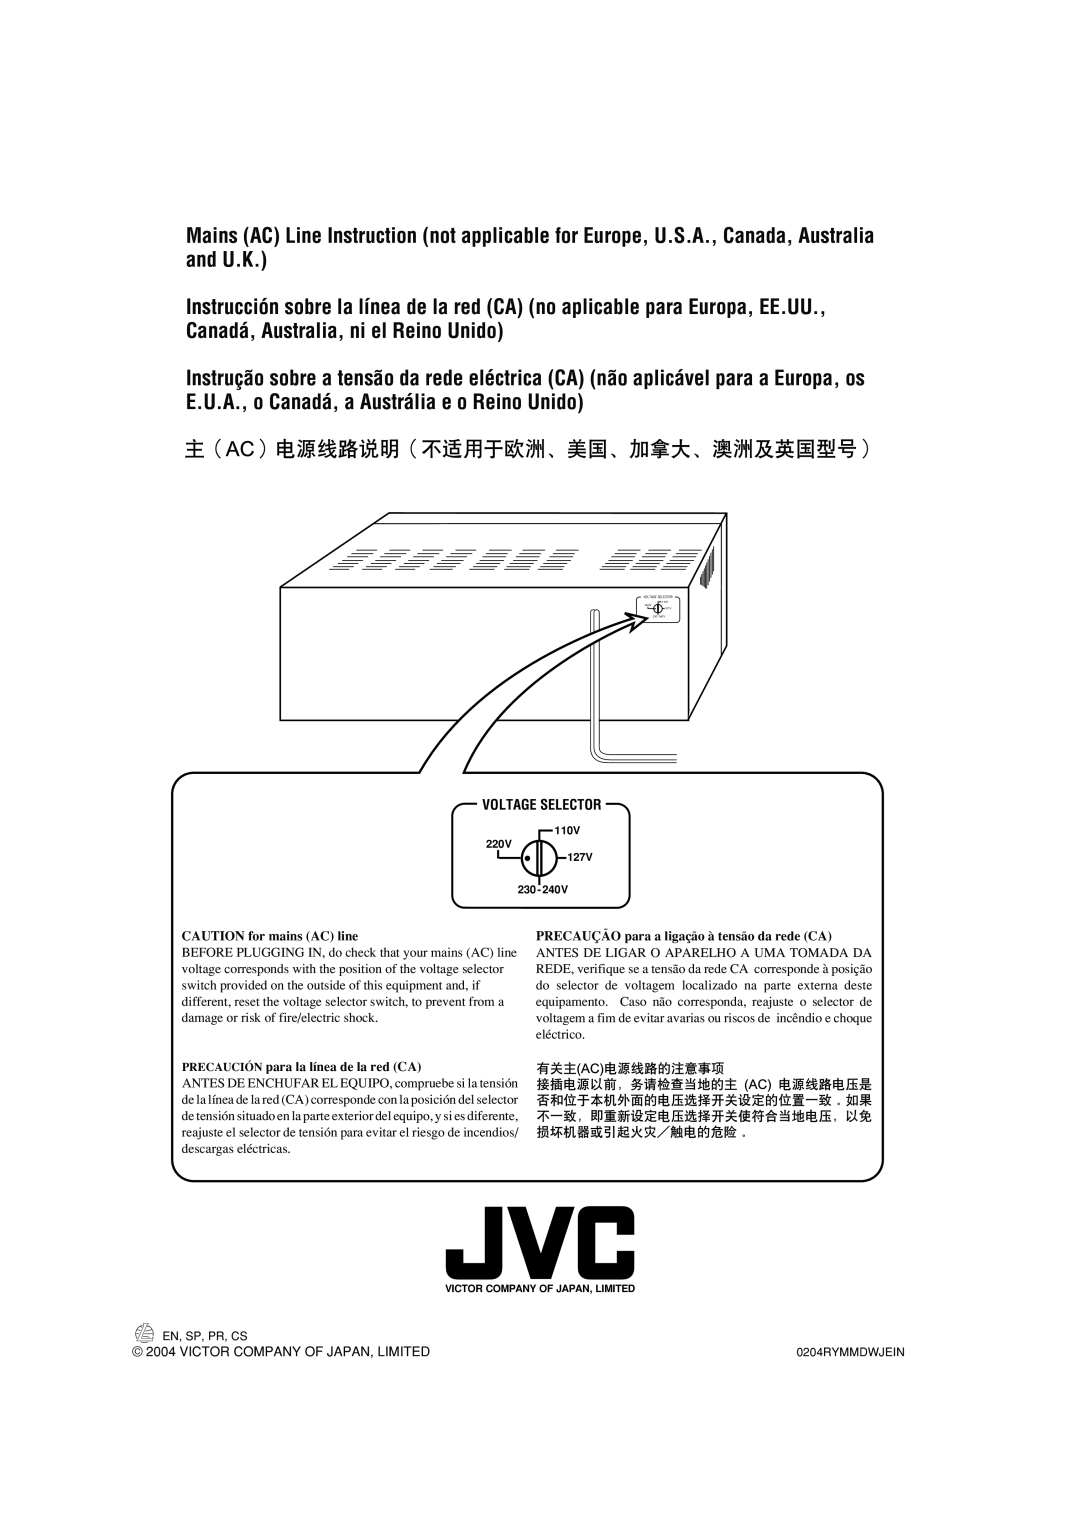 JVC LVT1140-004A manual CAUTION for mains AC line, PRECAUCIÓN para la línea de la red CA, Victor Company Of Japan, Limited 